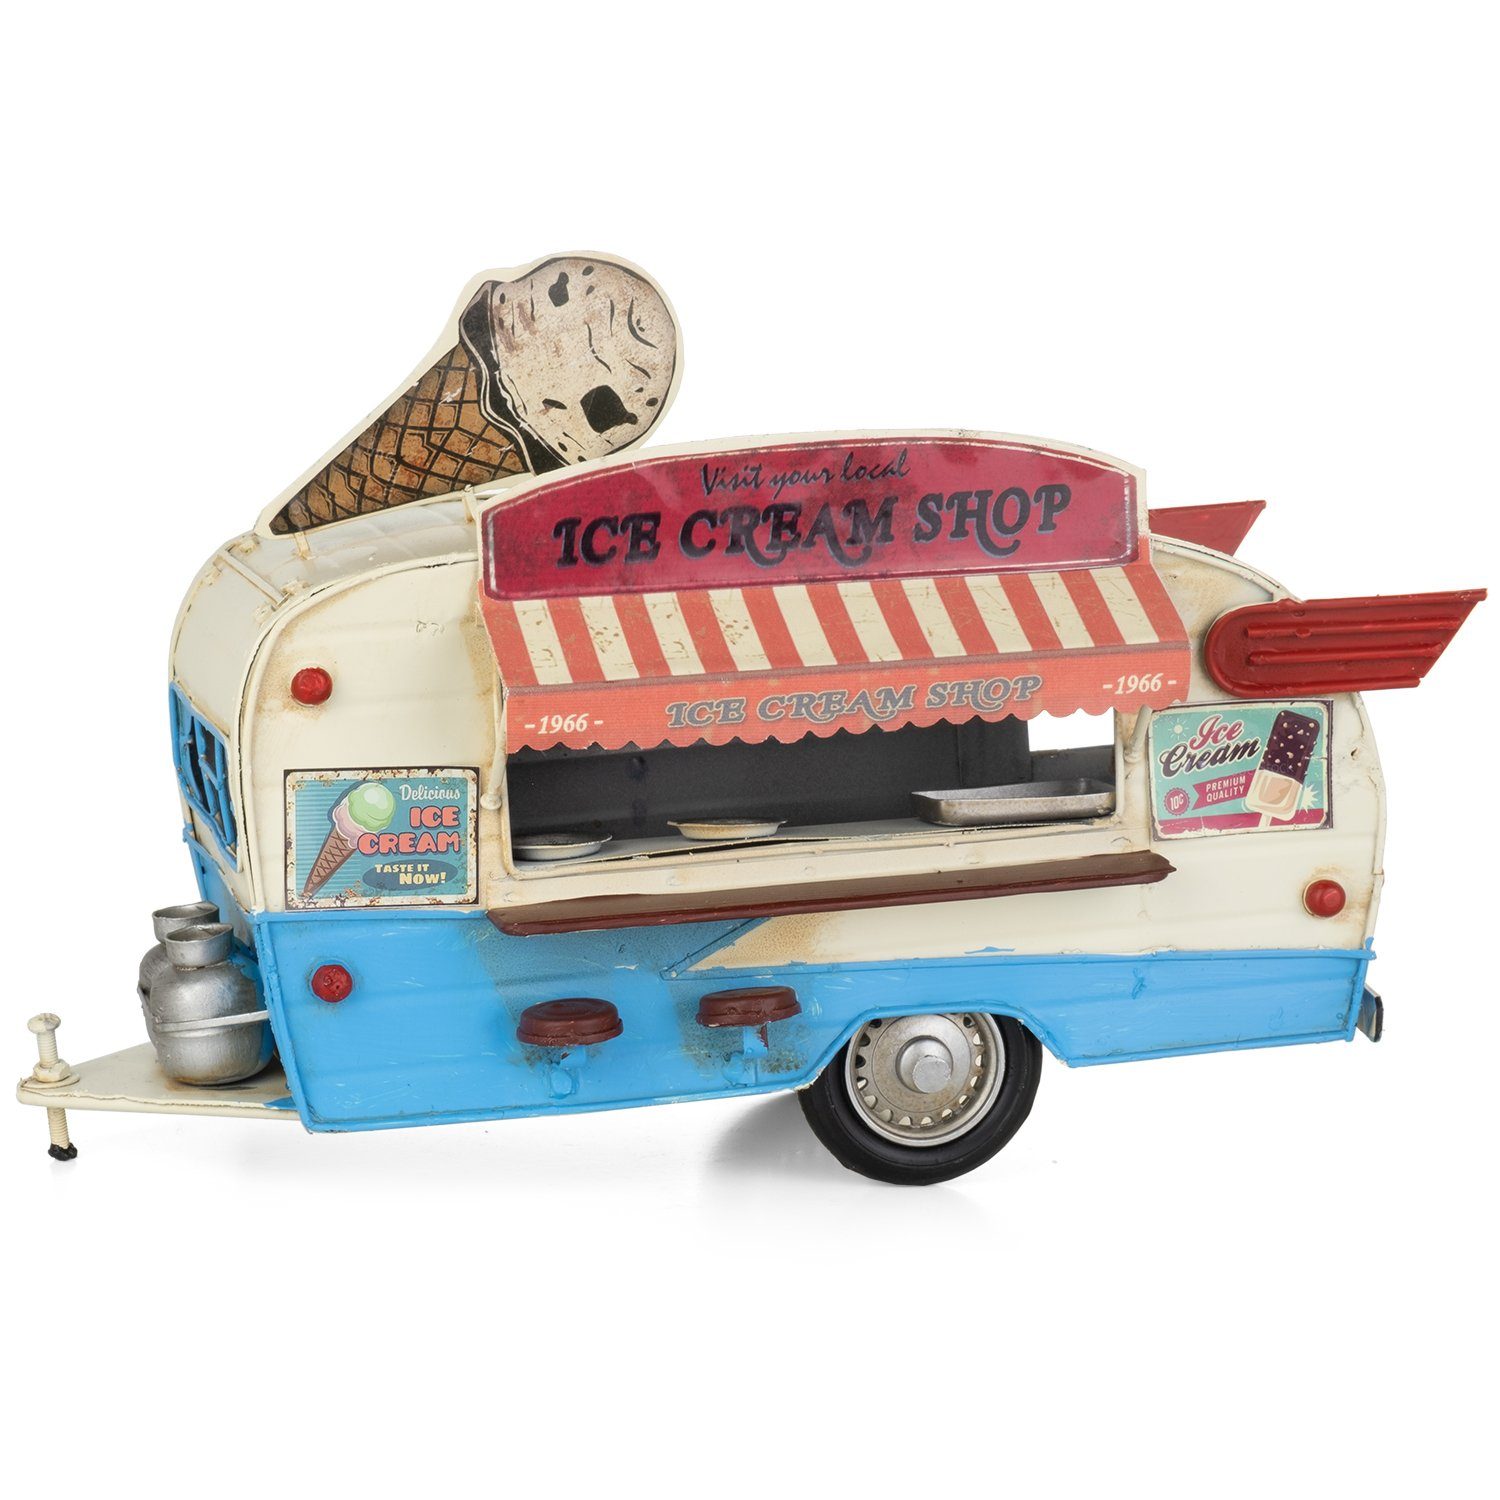 Moritz Dekoobjekt Blech-Deko Ice-Cream Stand Anhänger Wohnwagen, Modell Nostalgie Antik-Stil Retro Blechmodell Miniatur Nachbildung | Deko-Objekte